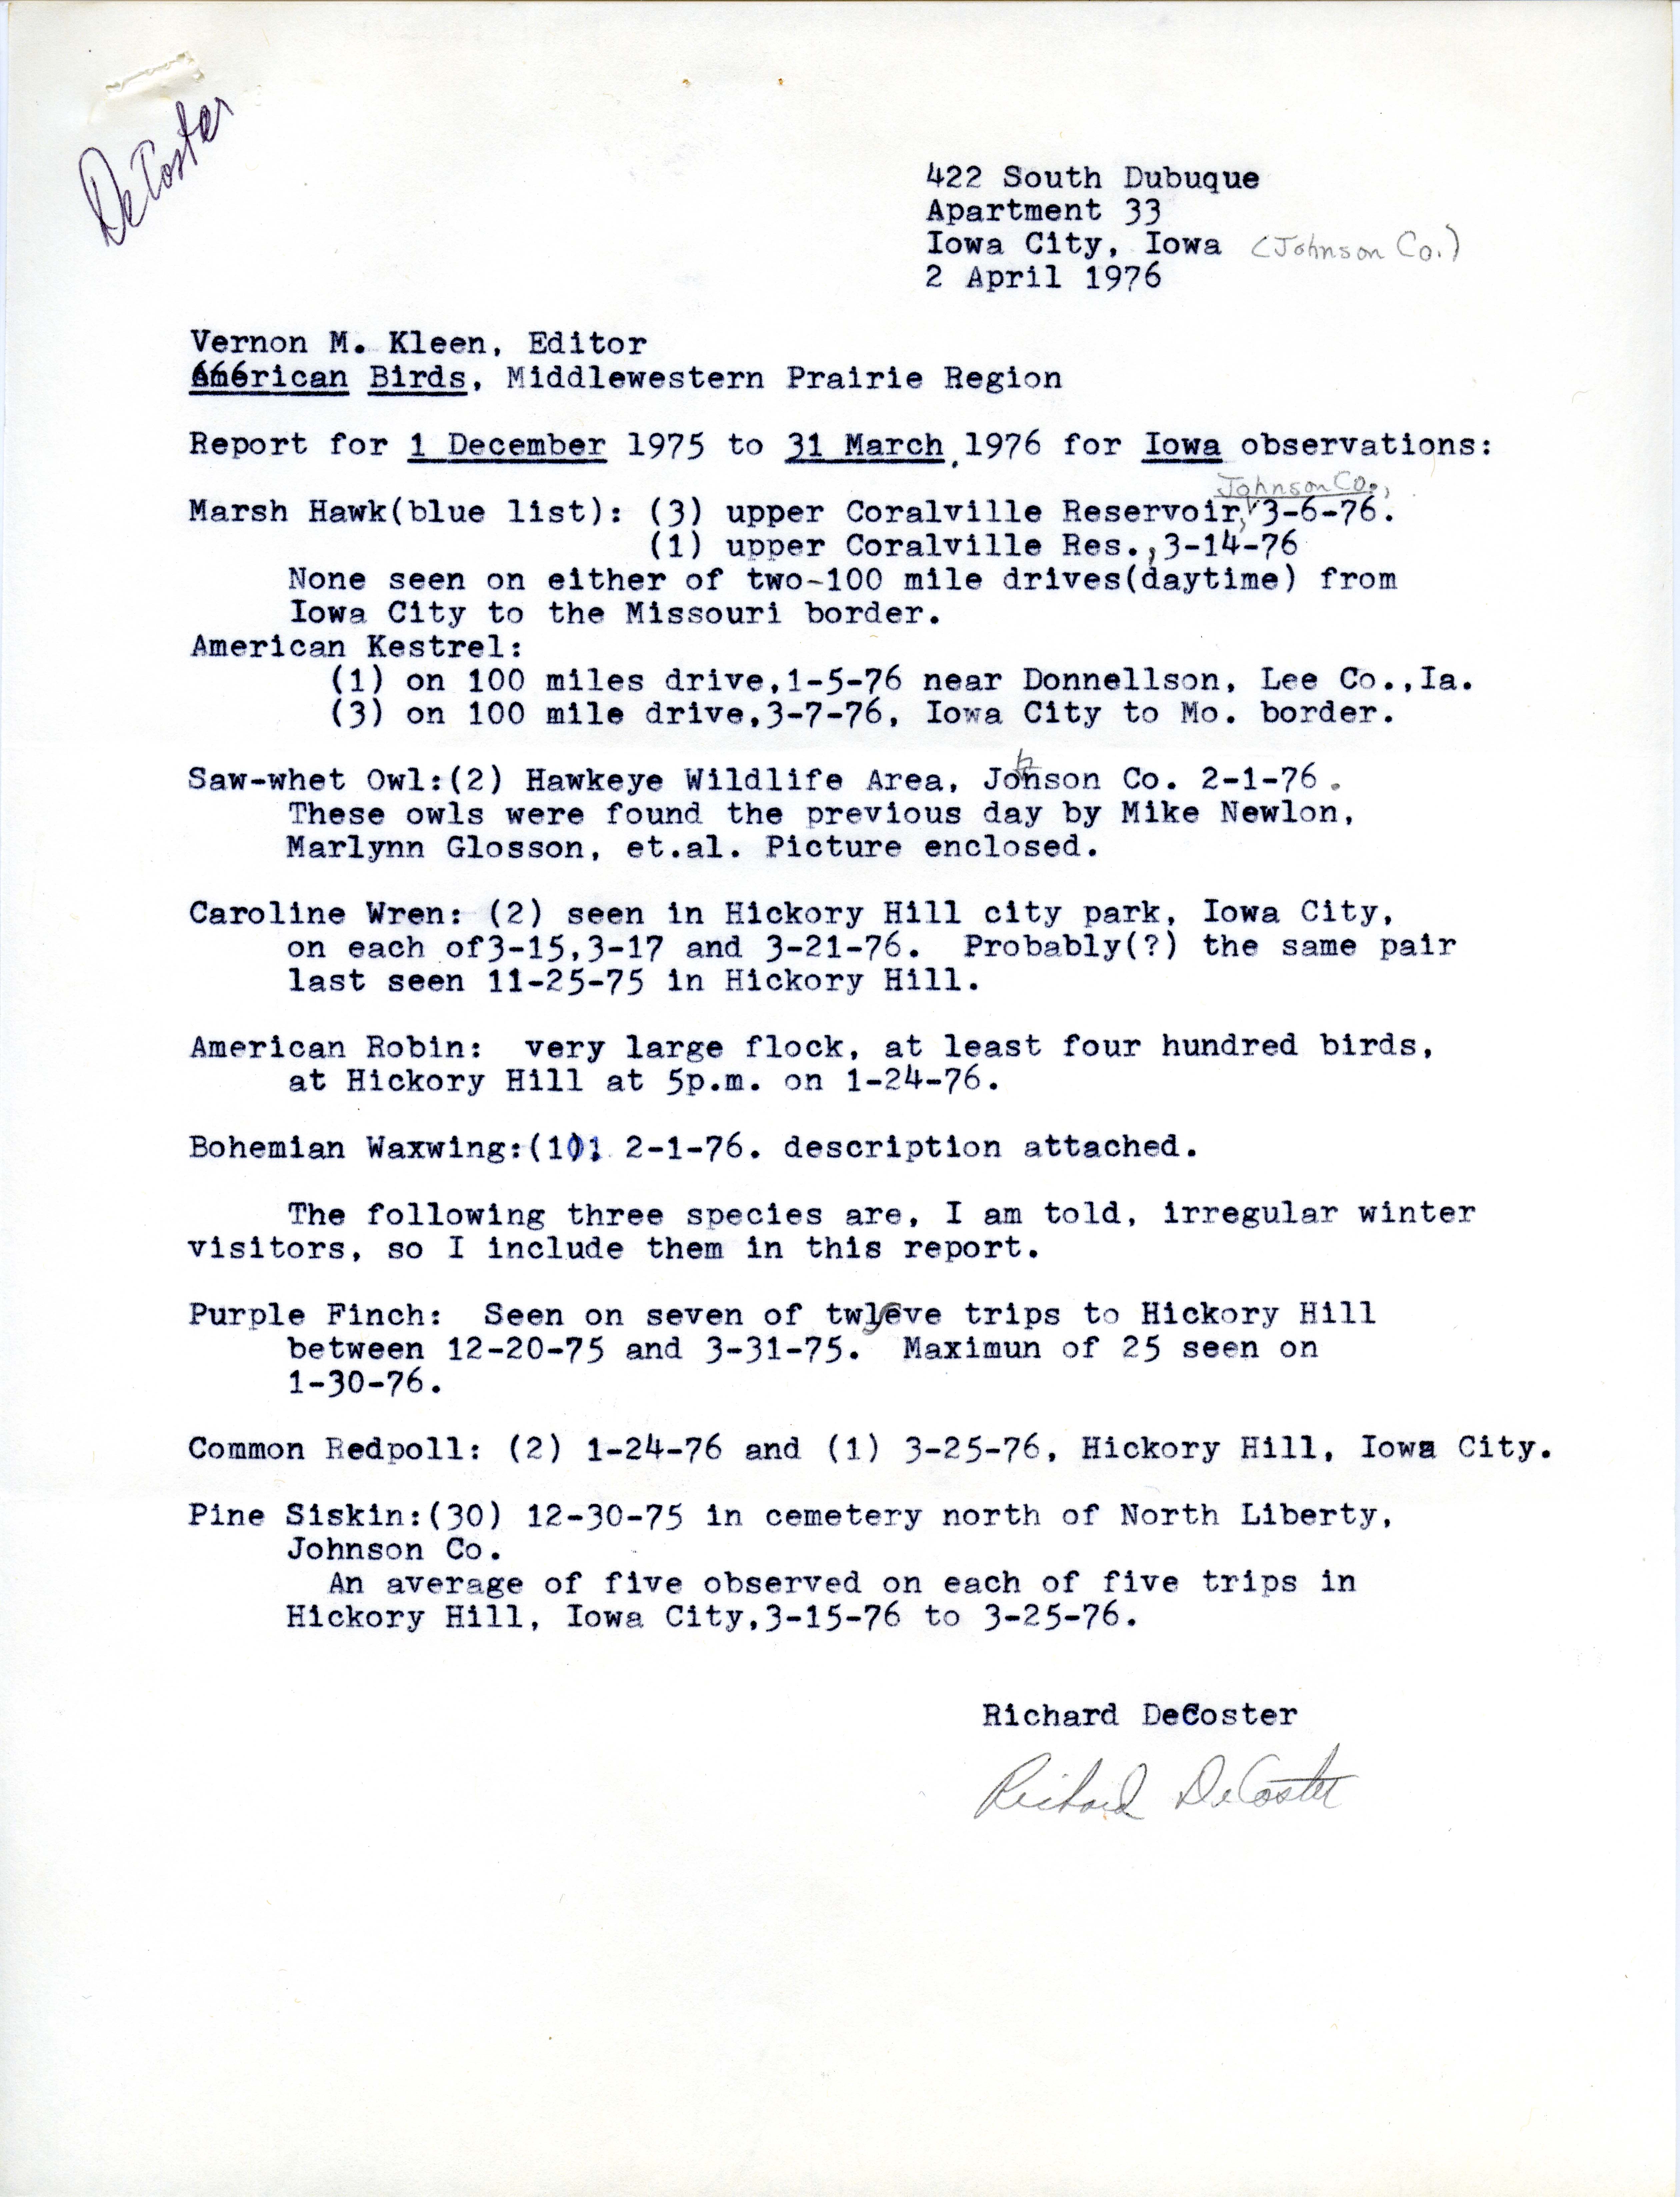 Richard DeCoster letter to Vernon Kleen regarding Iowa bird observations for winter 1975/1976, April 2, 1976